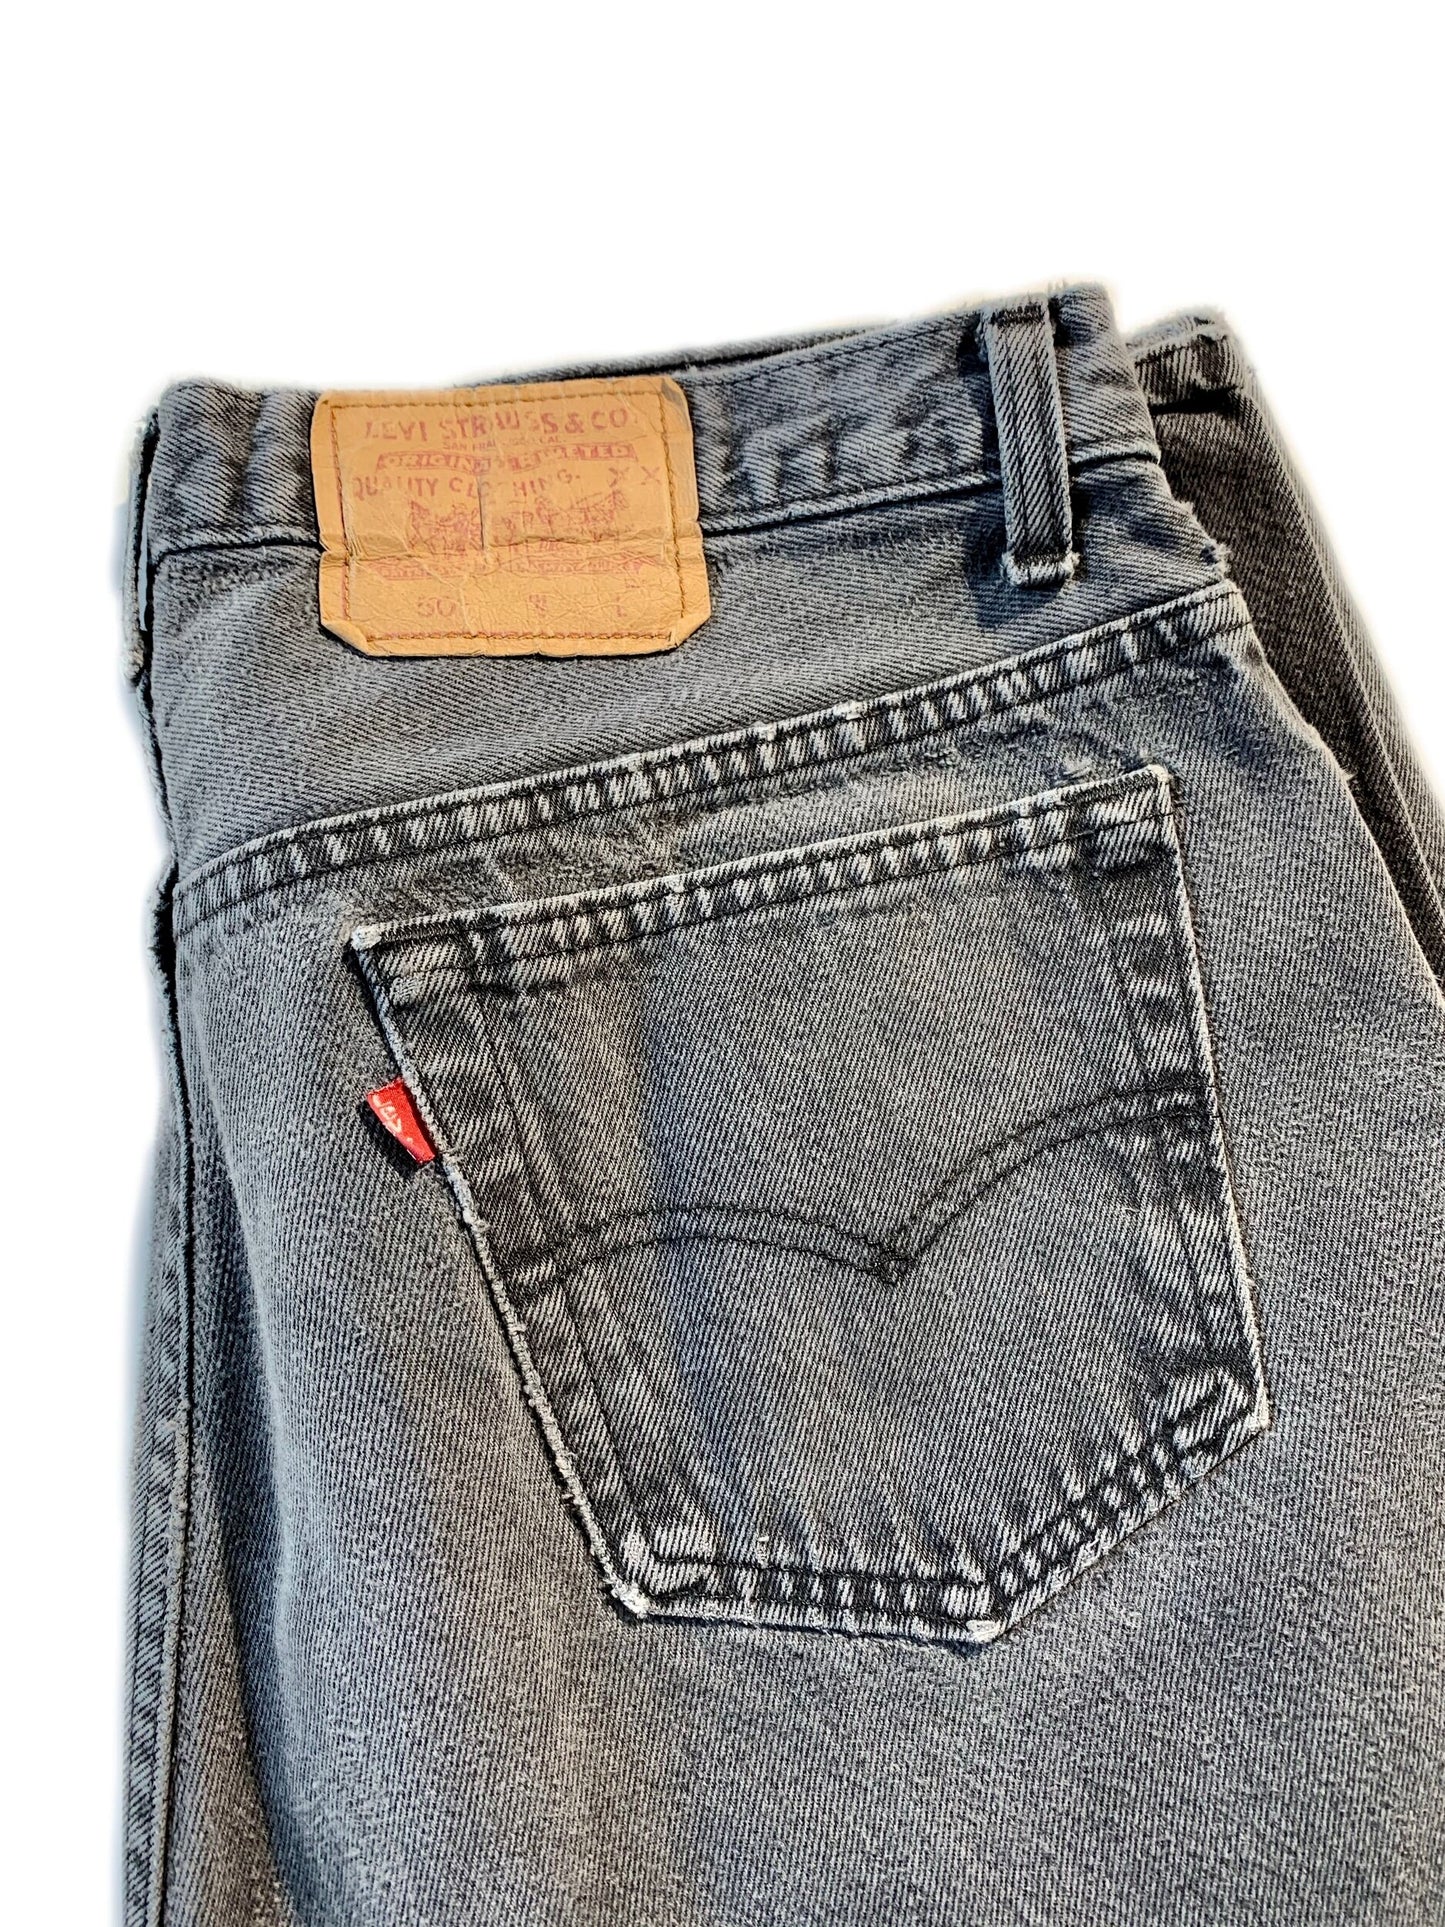 Vintage Dark Wash Levi’s 501 Jeans